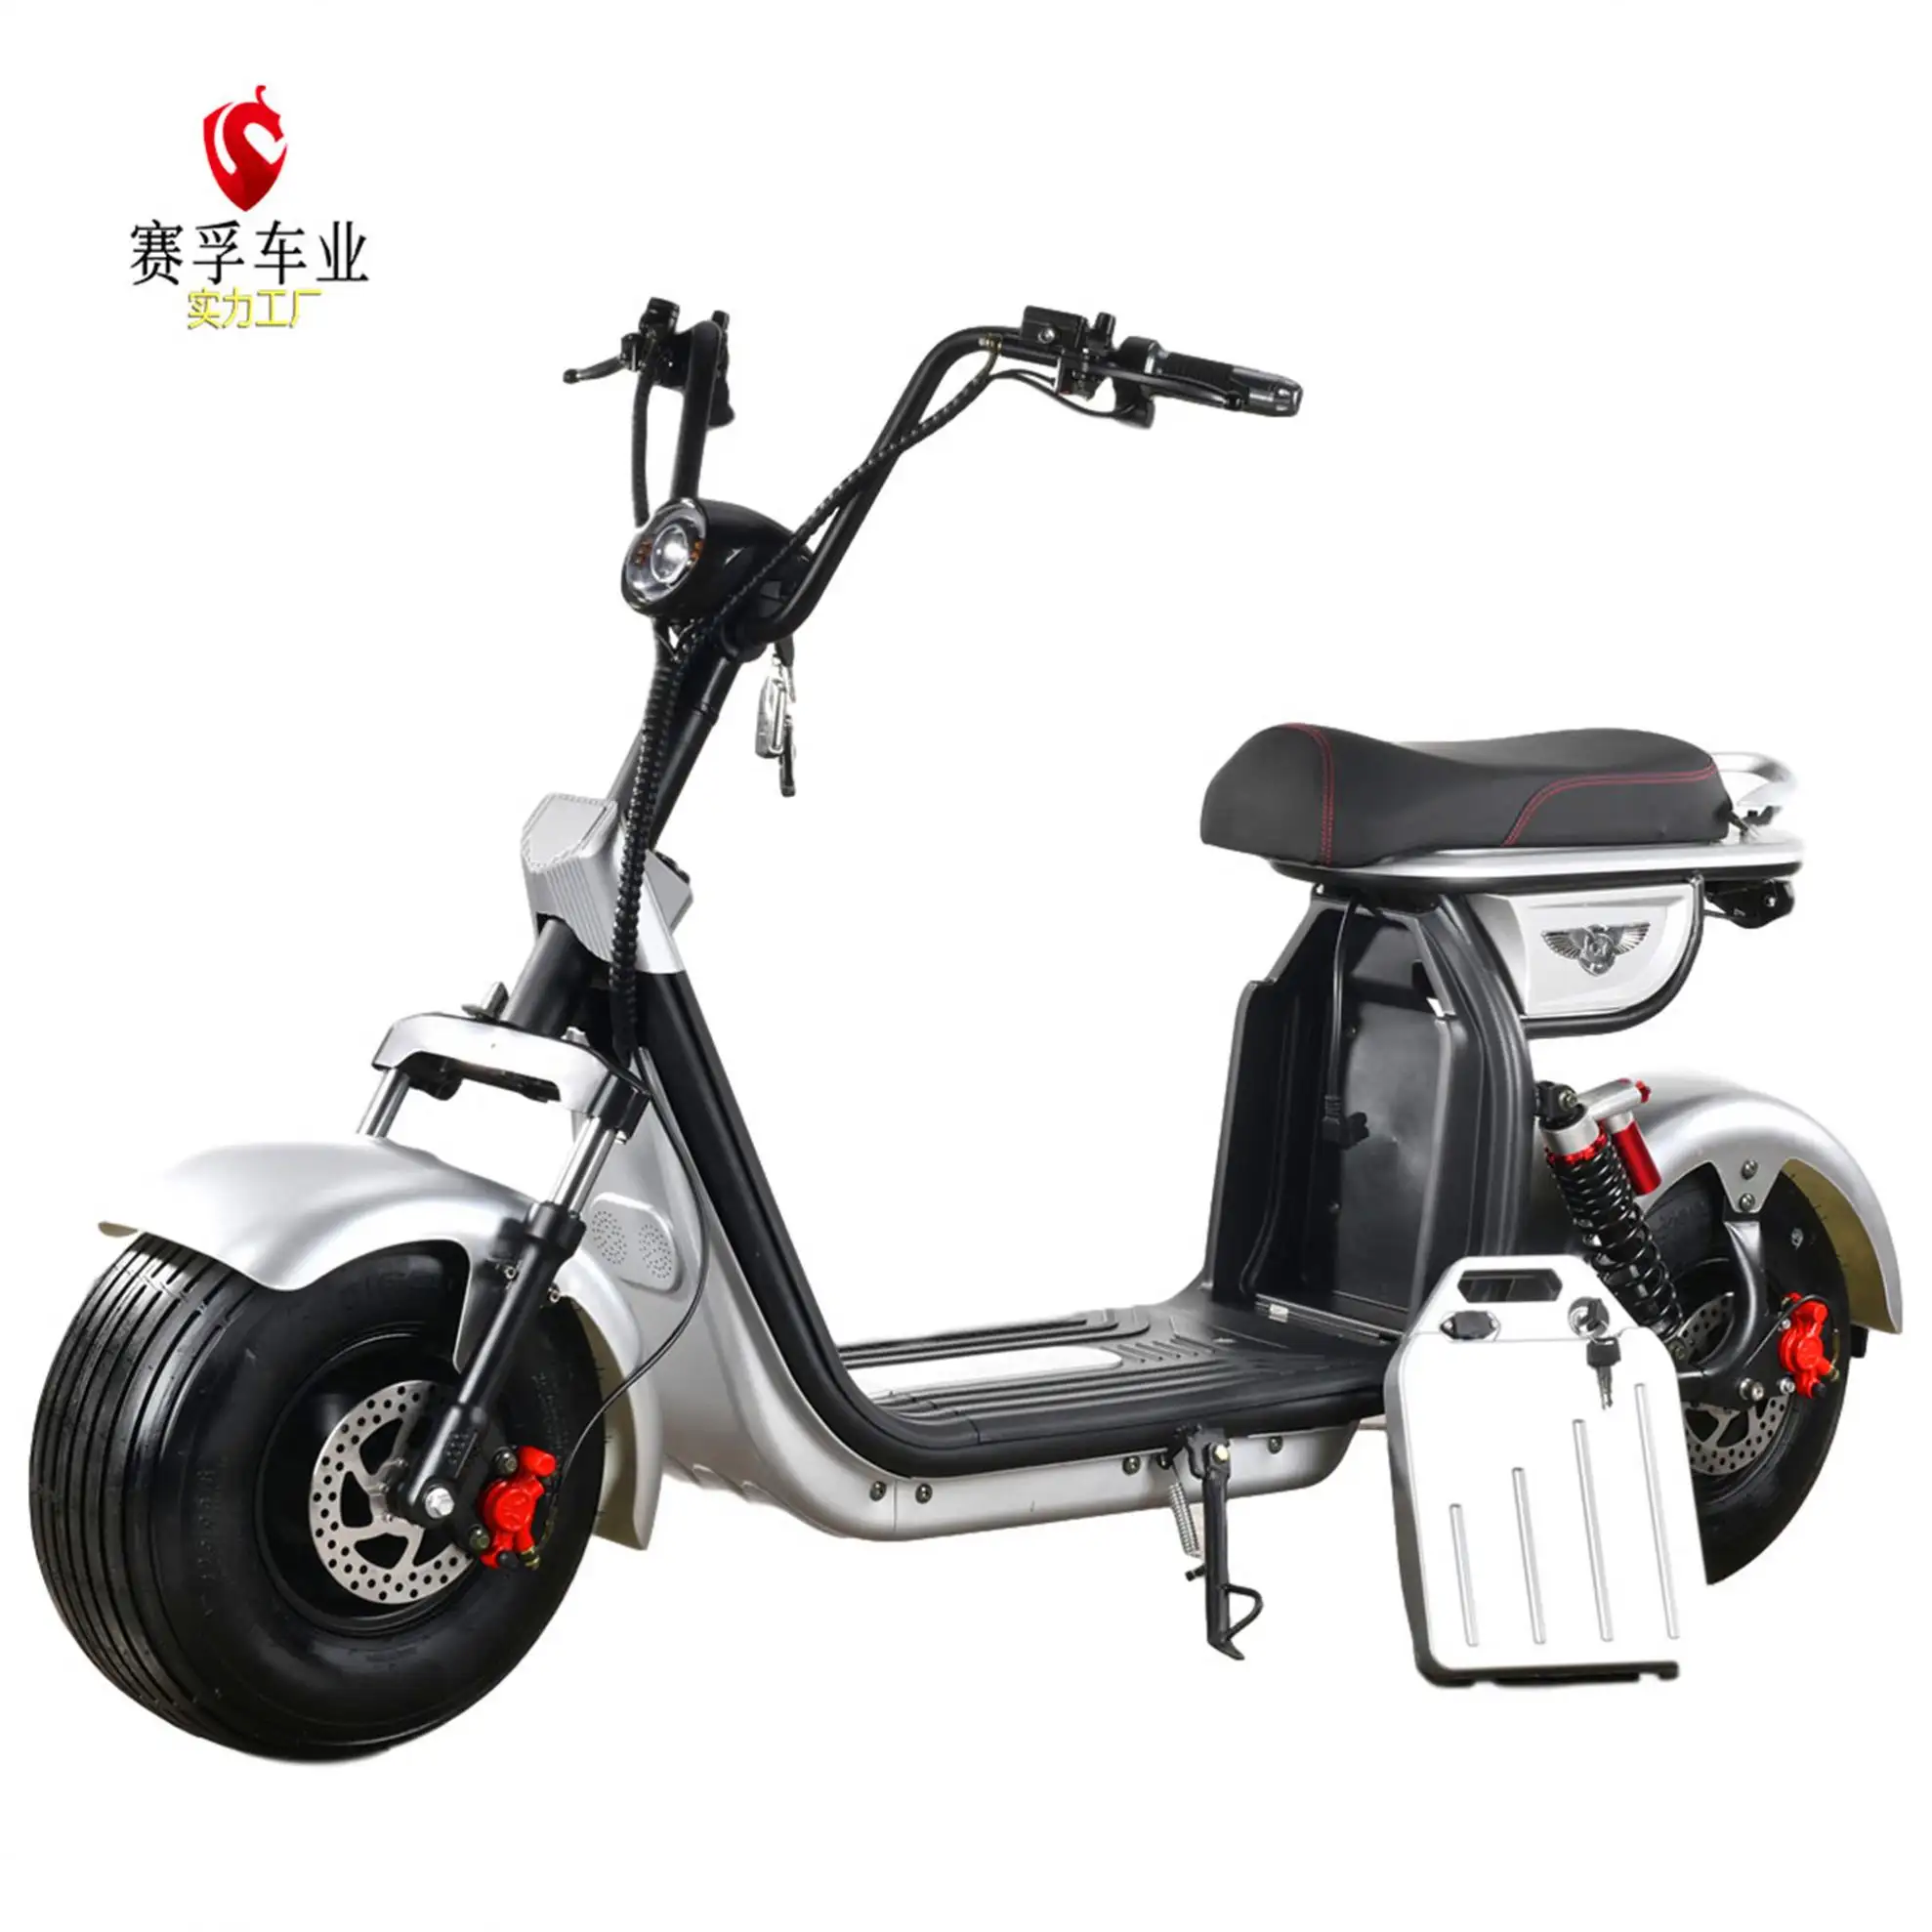 Sanili motosiklet elektrik motorları satışı Sacoches Moto fabrika doğrudan fiyat